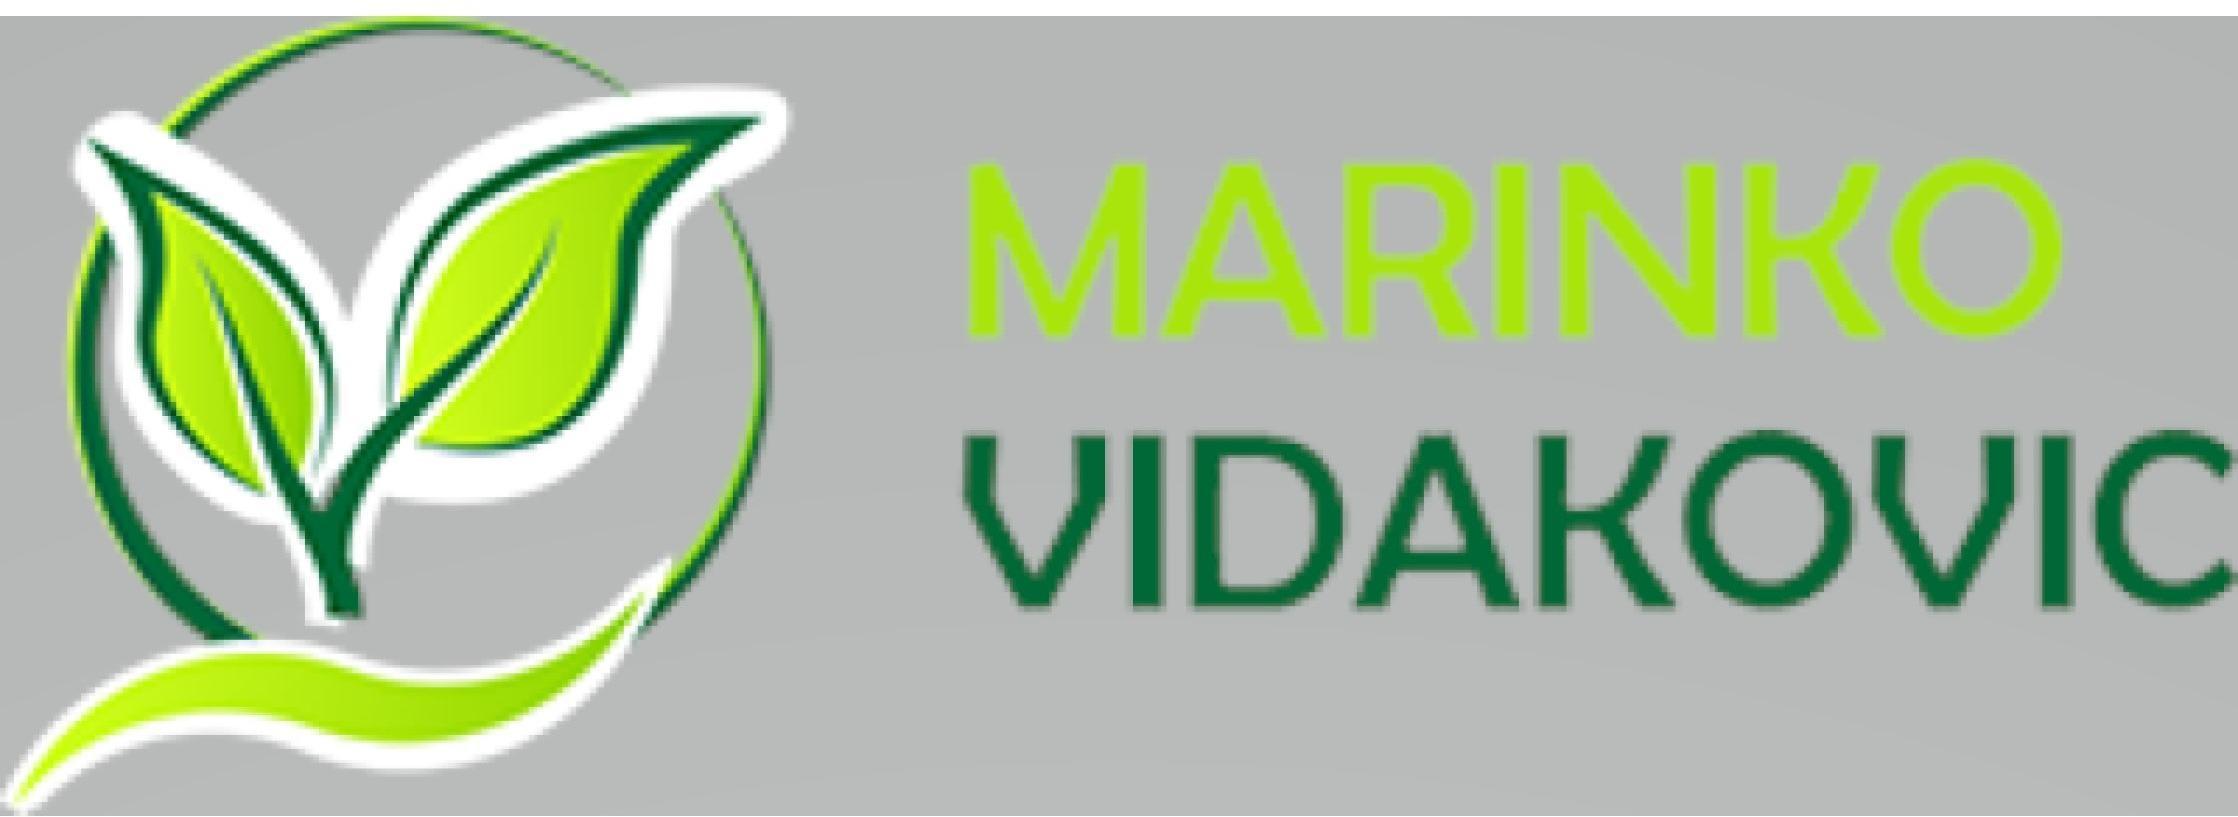 Logo Vidakovic Marinko